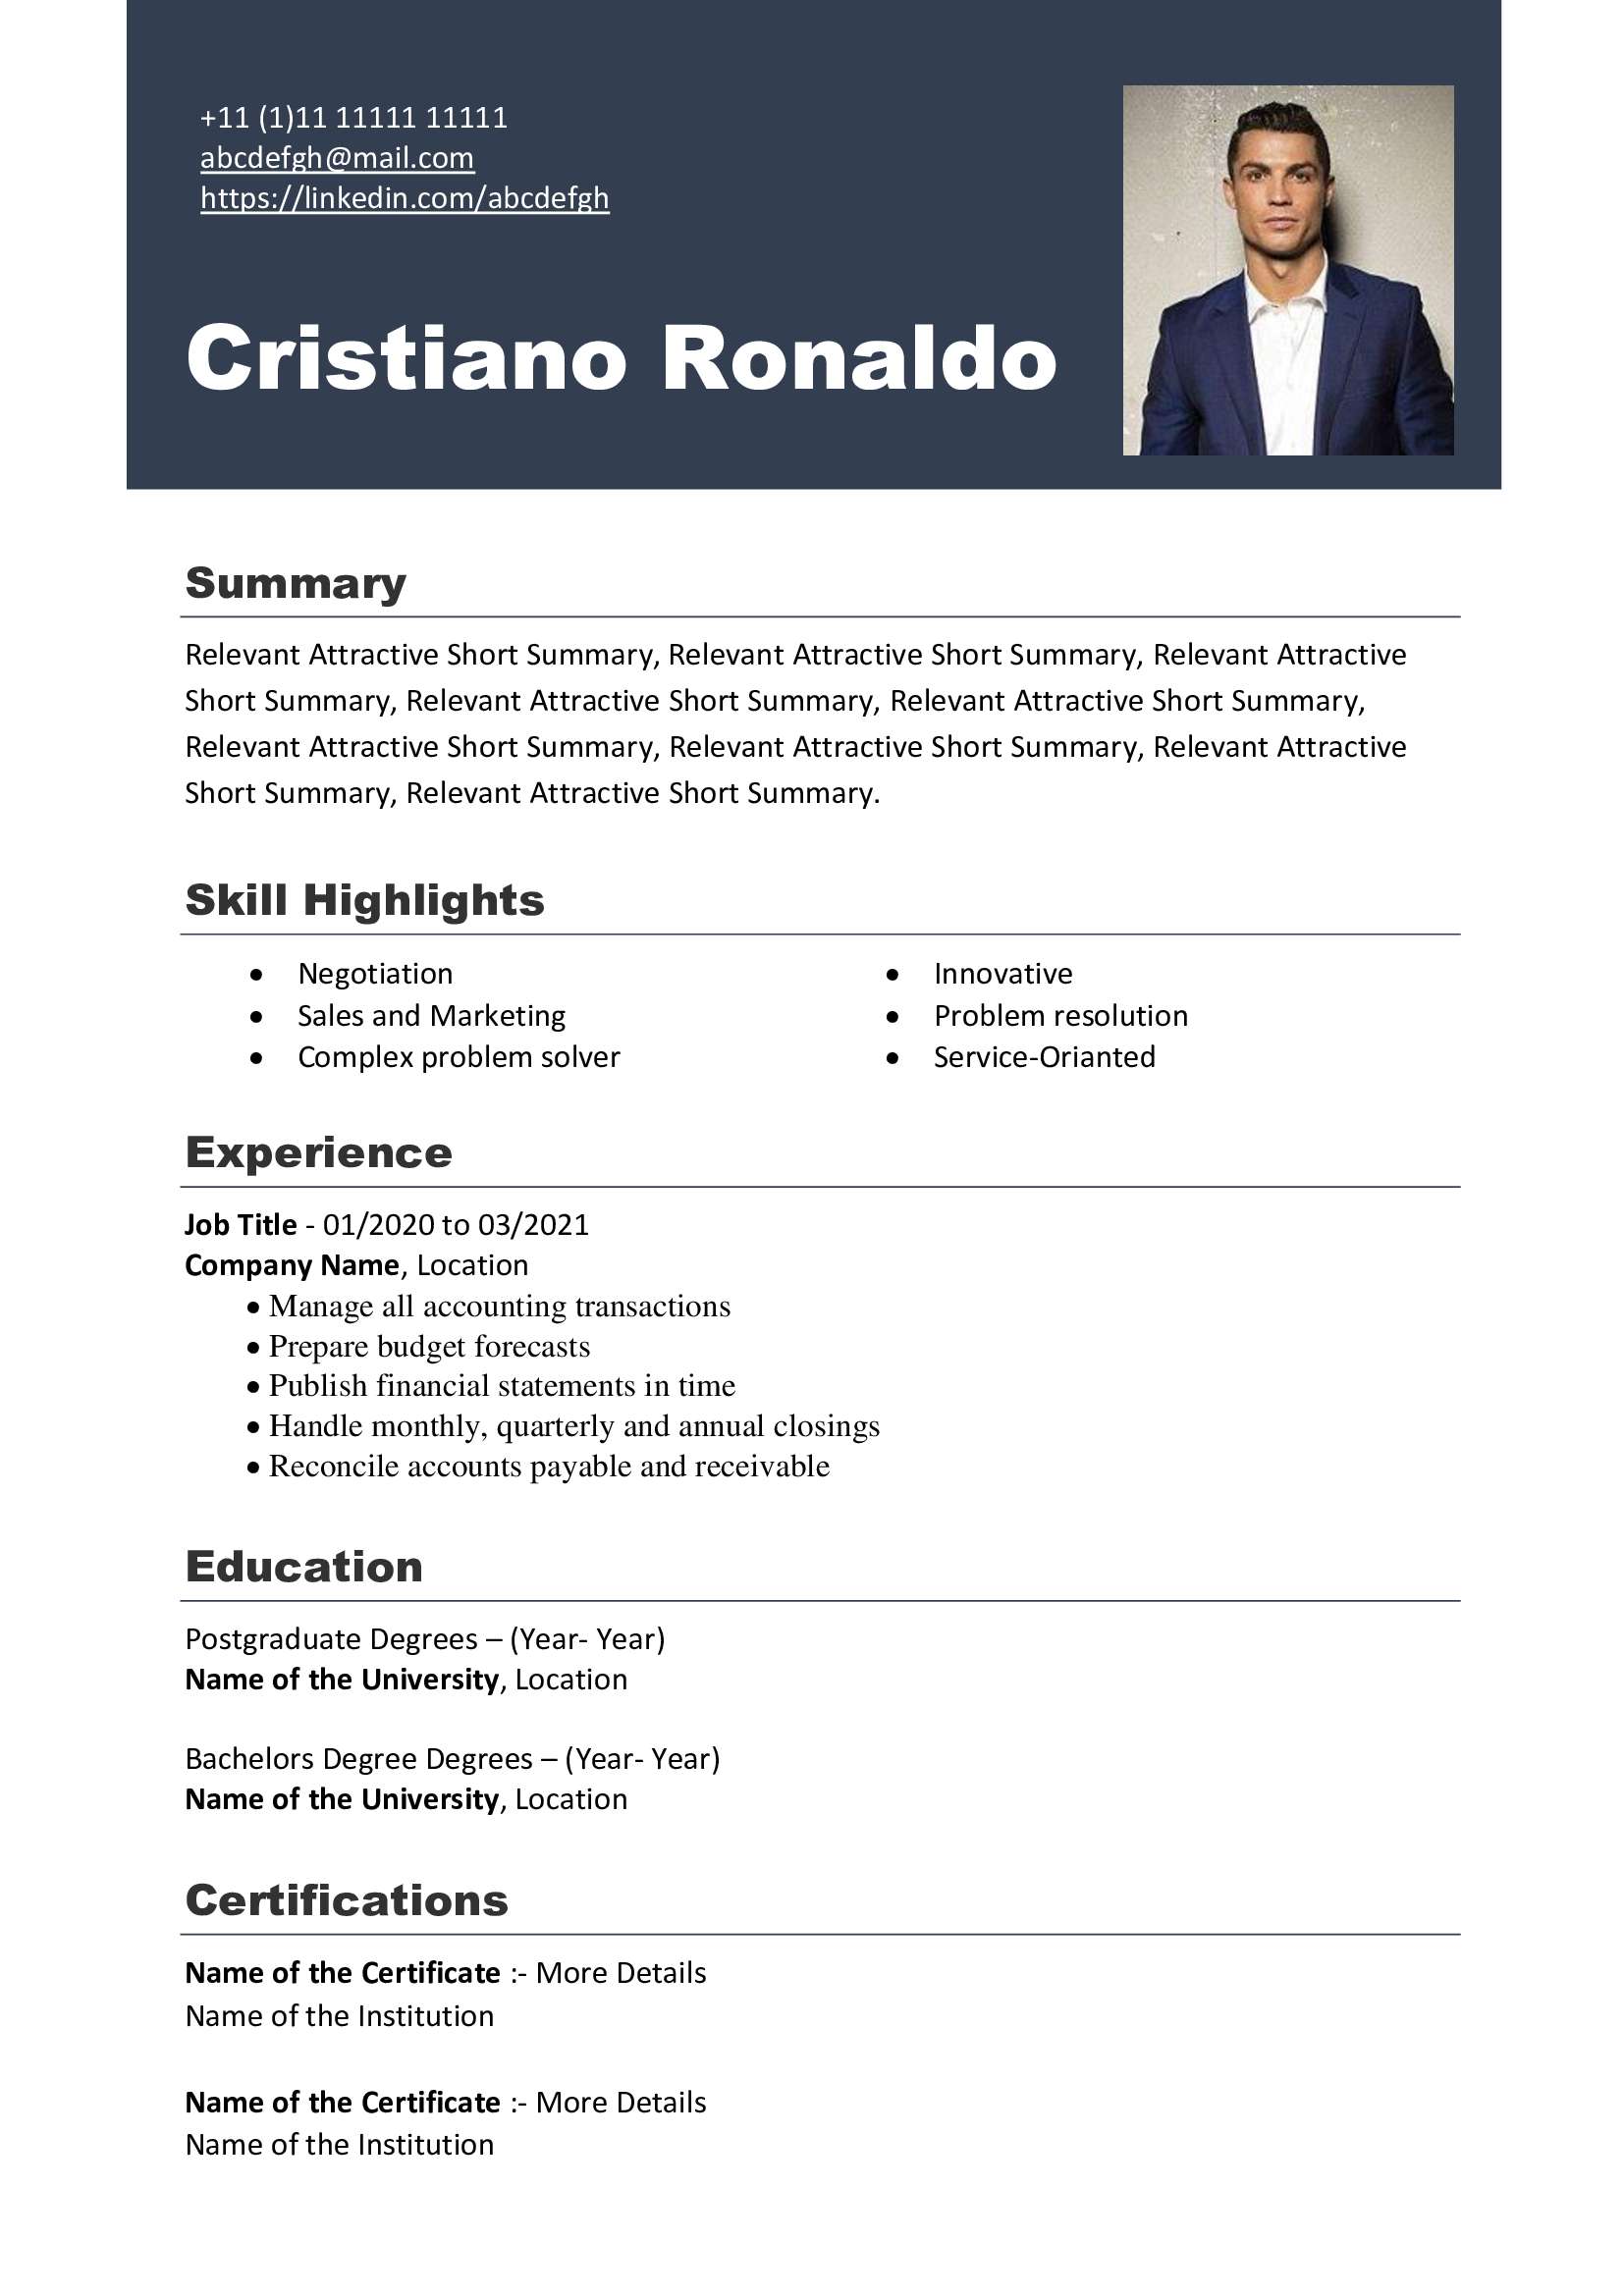 Free Download Professional CV Templates - Editable DOC - Cristiano Ronaldo